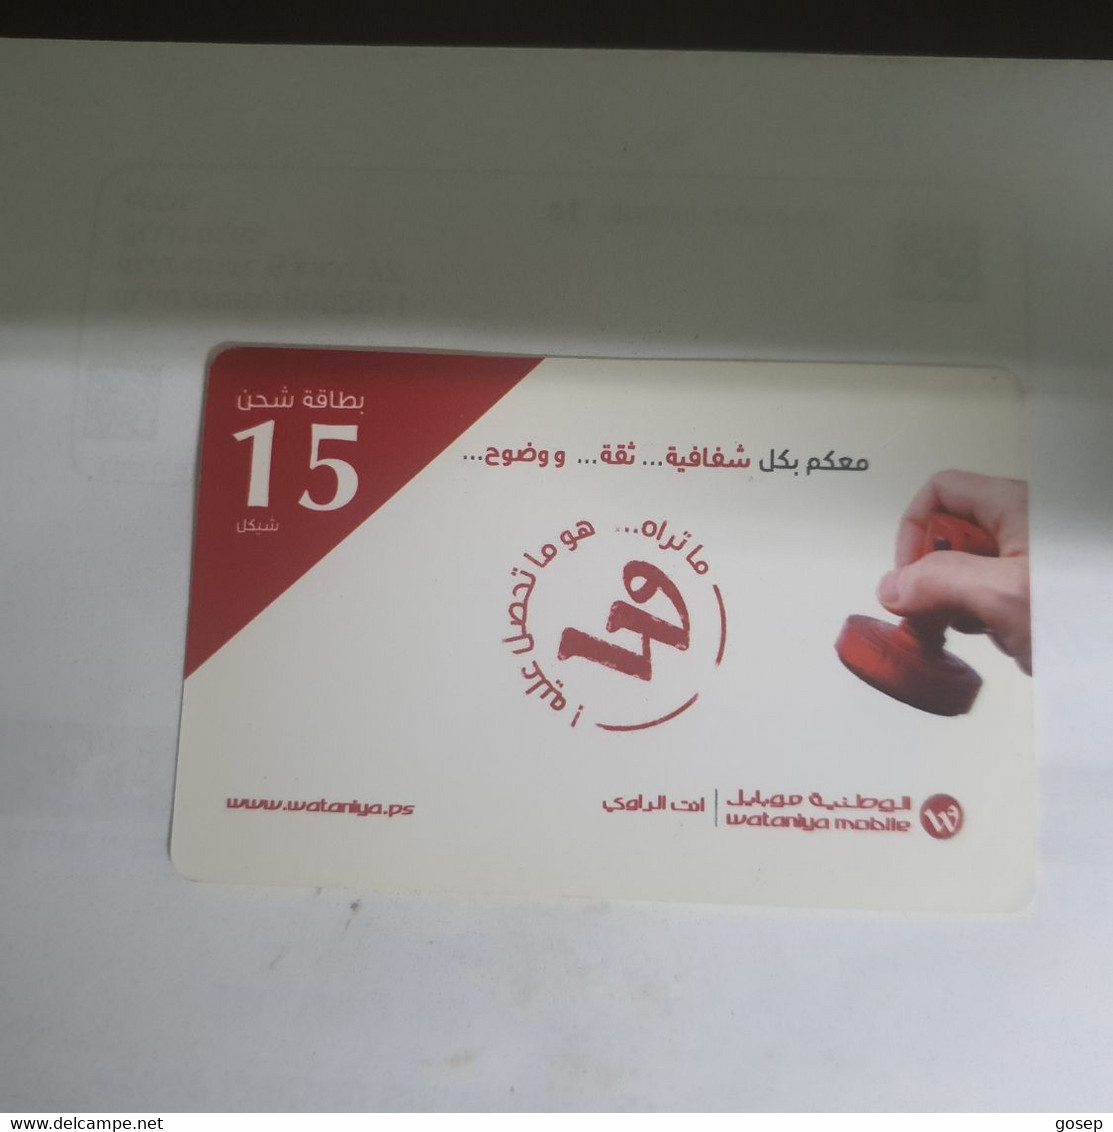 PALESTINE-(PS-WAT-REF-0005D)-Mobile 15-(382)-(7869-8398-9213-4367)-(1/8/2015)used Card+1prepiad Free - Palästina